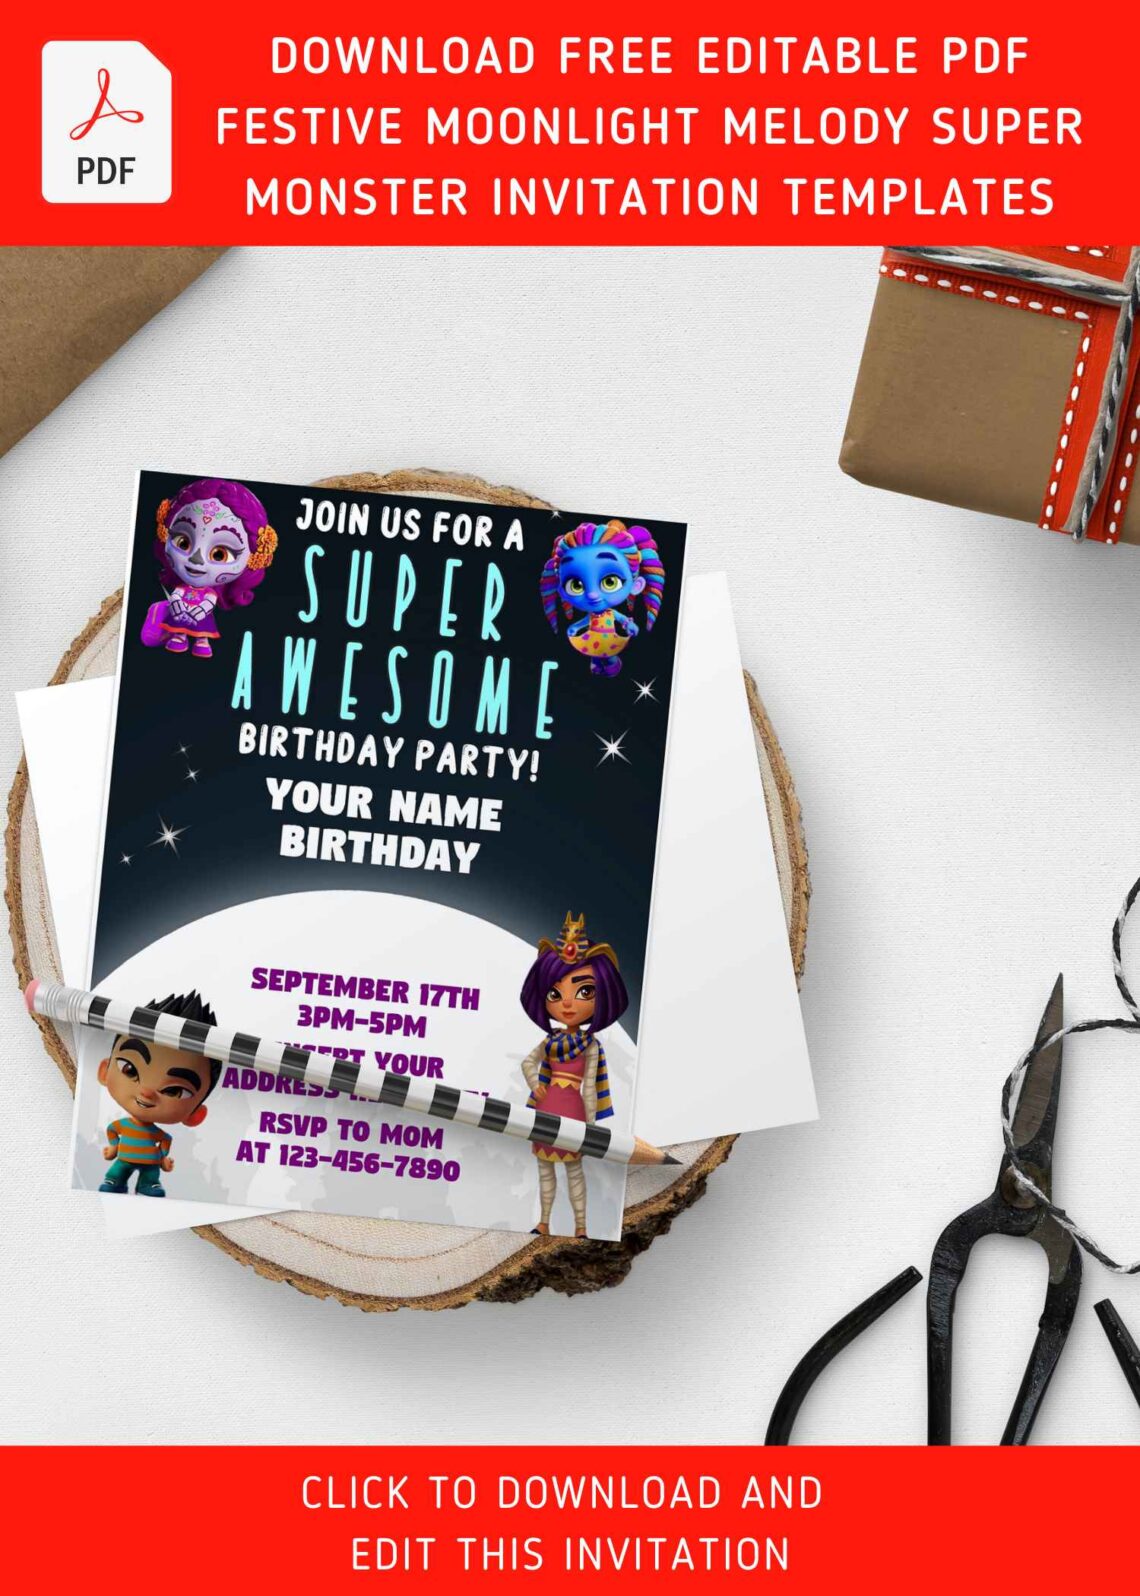 (Free Editable PDF) Spooky Super Monster Birthday Invitation Templates with adorable Zoe